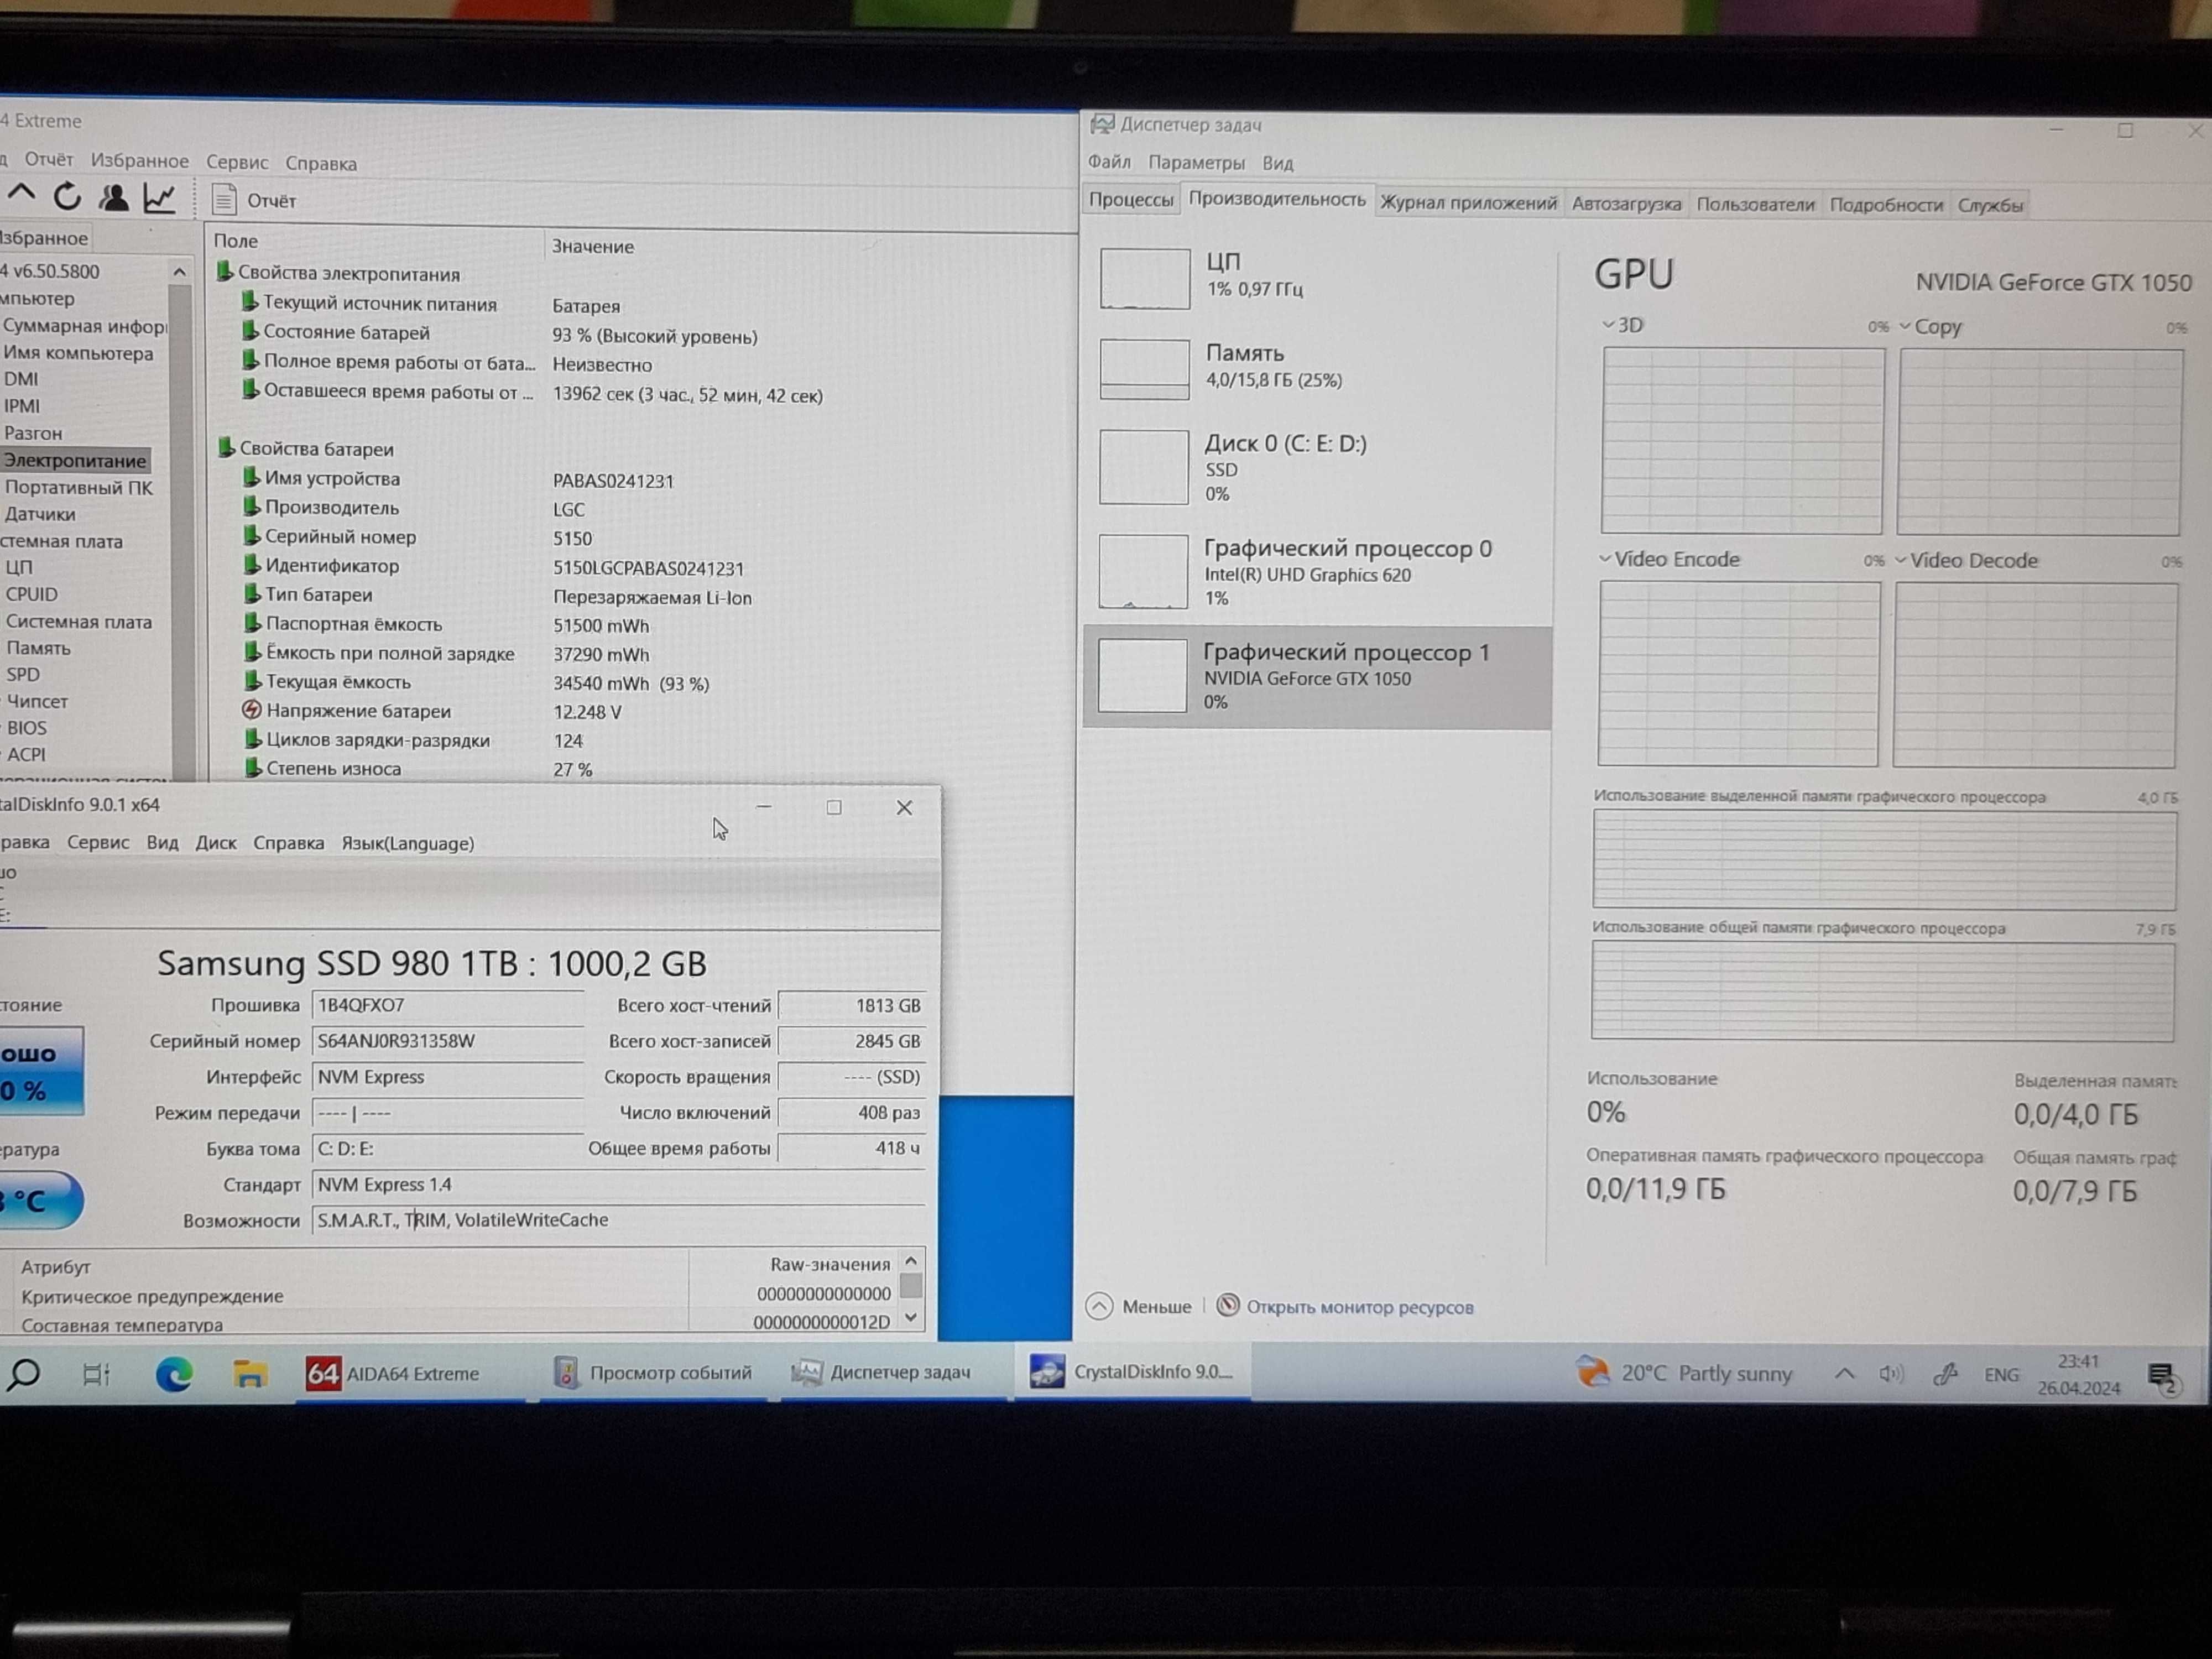 Ноутбук 15.6" Lenovo Yoga 730 15,6" i7-8550U RAM 16GB SSD 1TB GTX 1050